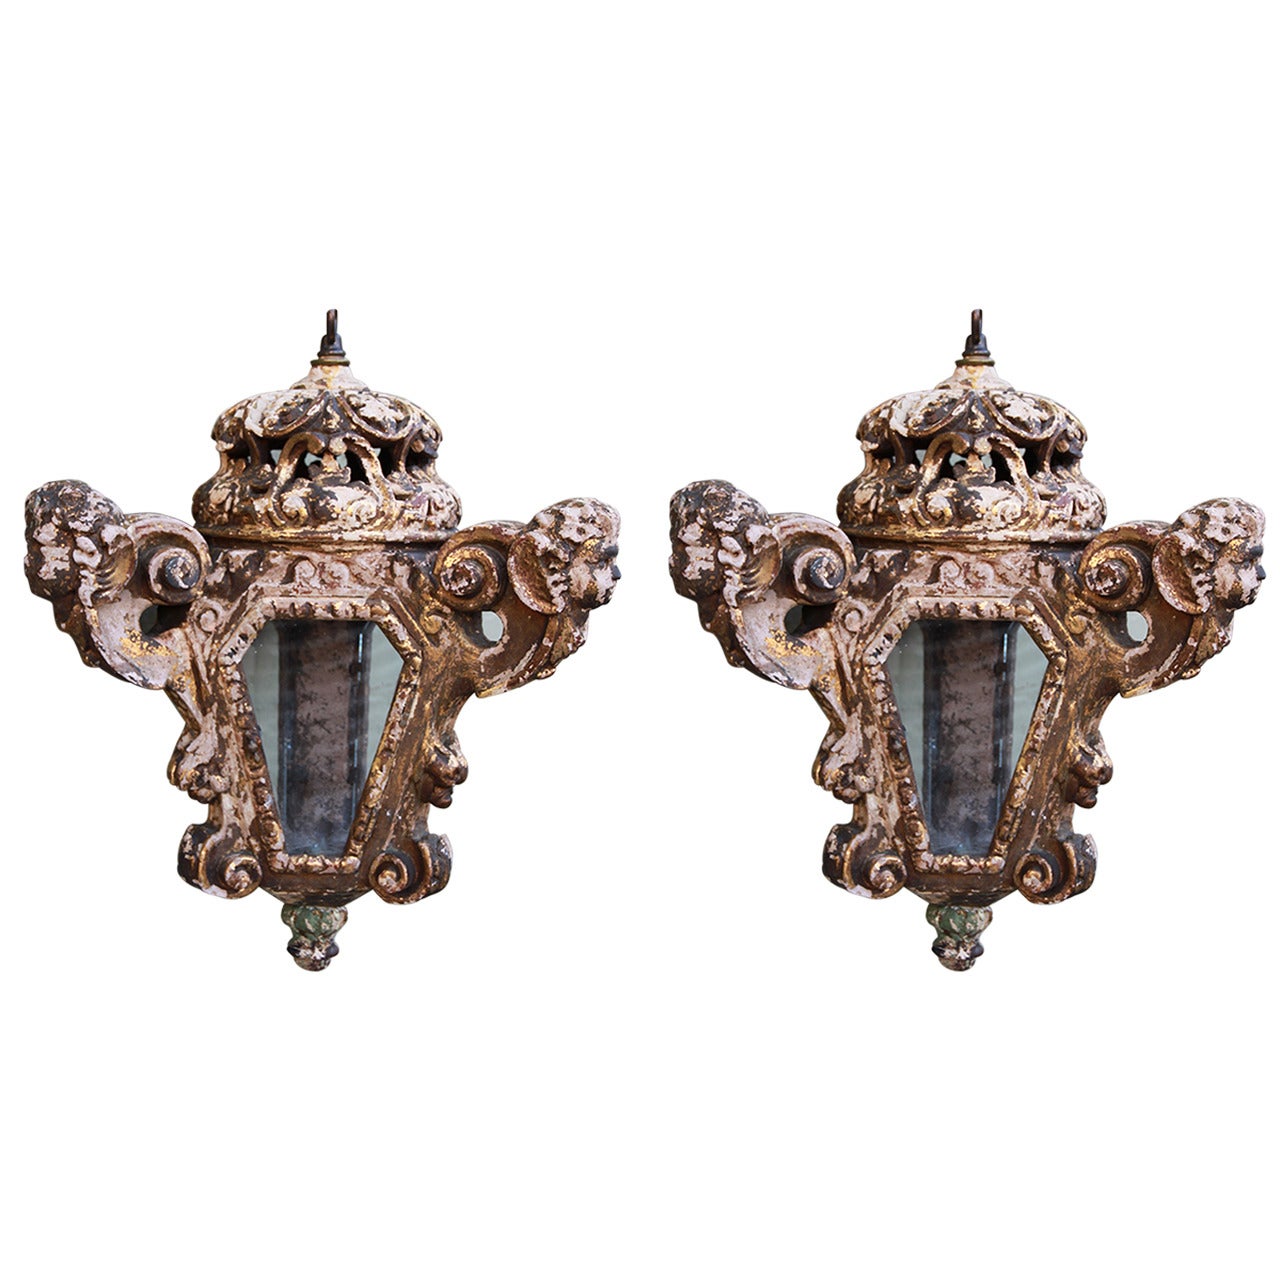 Pair of Italian Baroque Style Cherub Lanterns